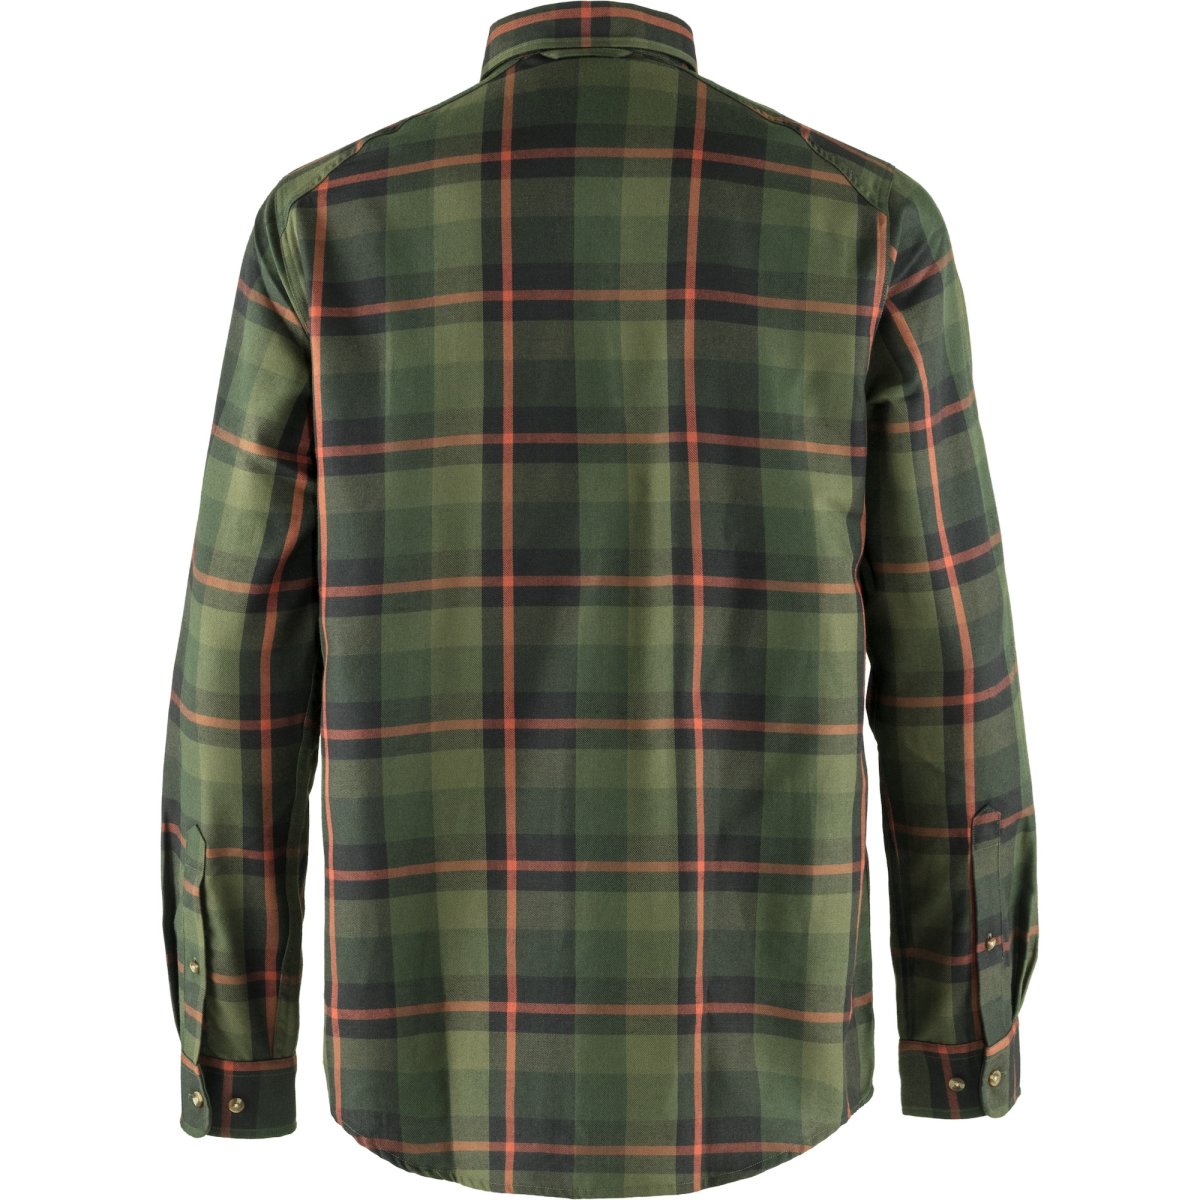 Fj&auml;llr&auml;ven Fj&auml;llglim Shirt 81380 laurel green Outdoorhemd Funktionshemd Jagdhemd